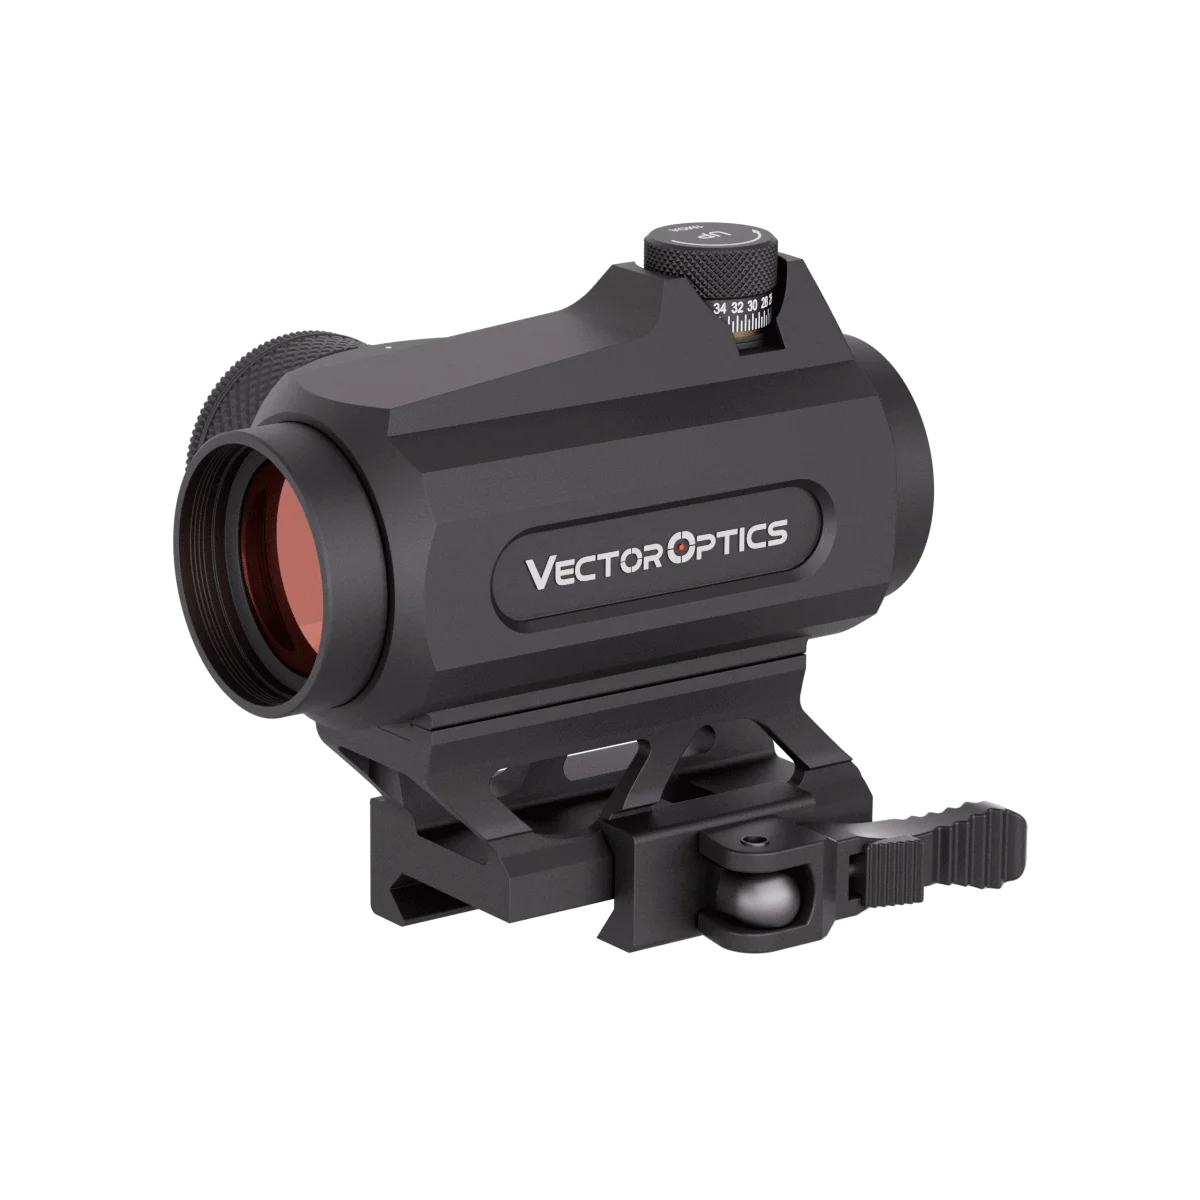 Vector Optics Maverick-II 1x25 GenII Red Dot Sight With Motion Sensor Feature For AR15 AK .223 .308 12GA Tactics Hunting